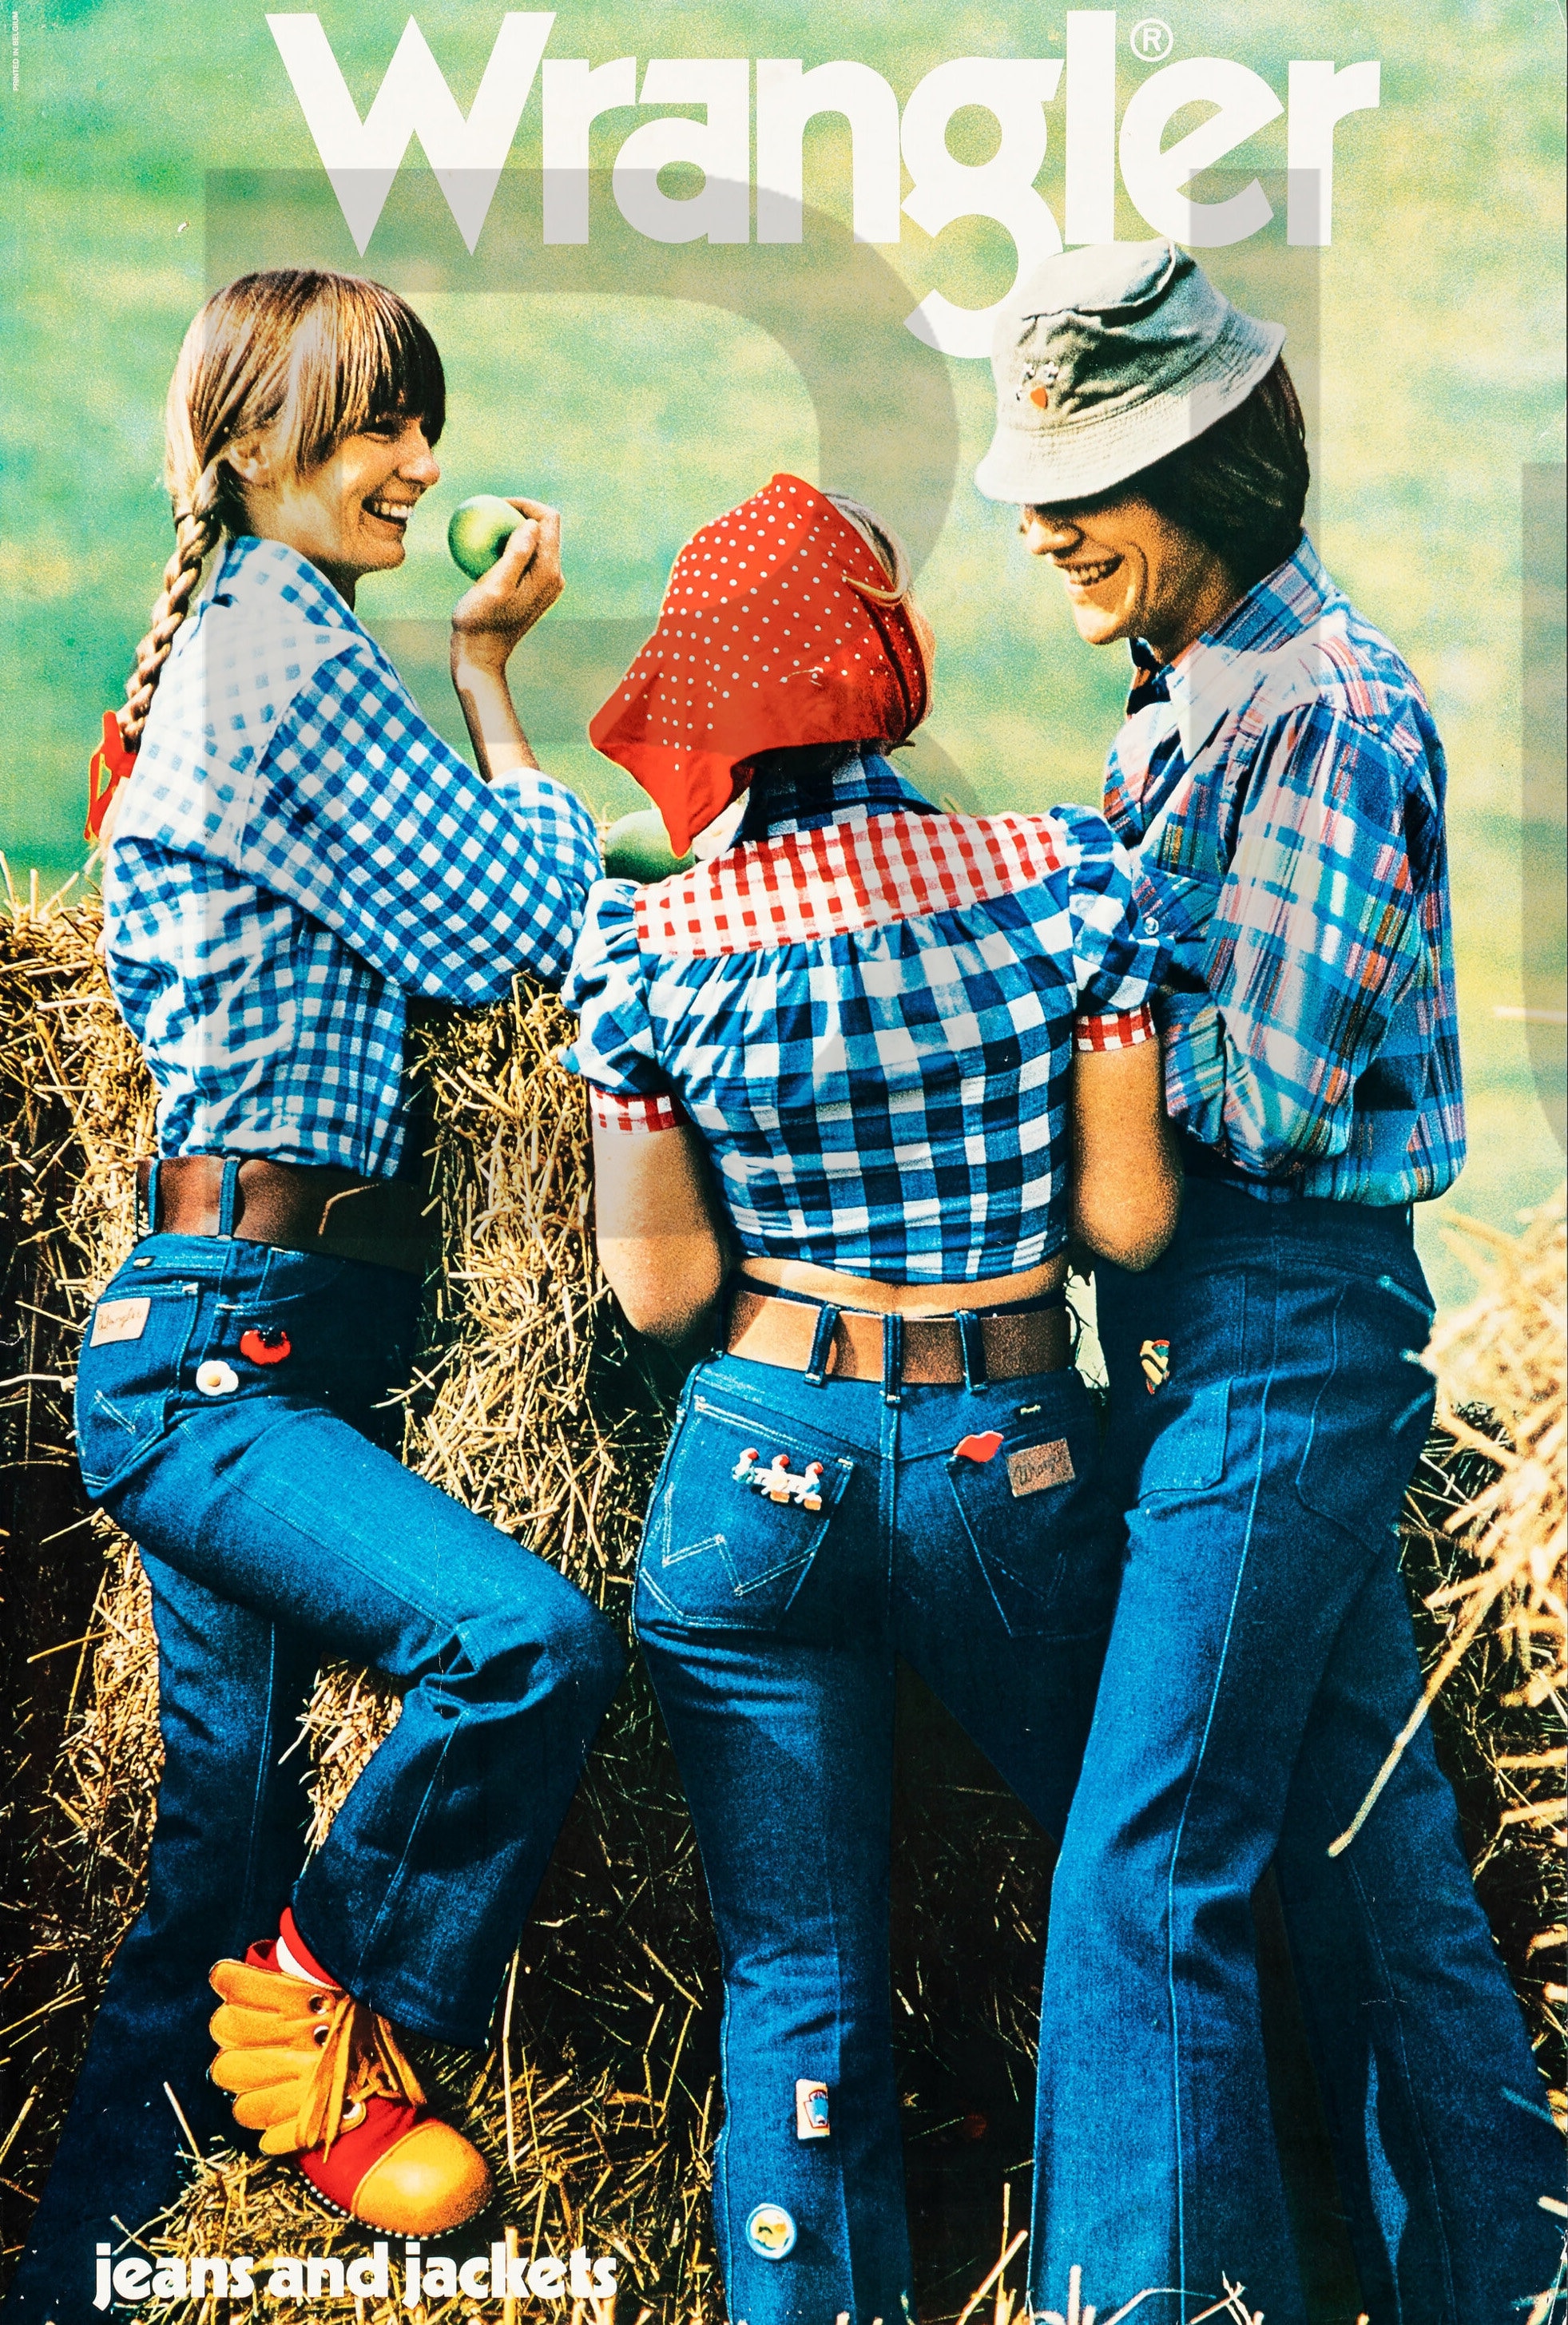 1970s Wrangler Jeans Ad 13 X 19 Photo Print